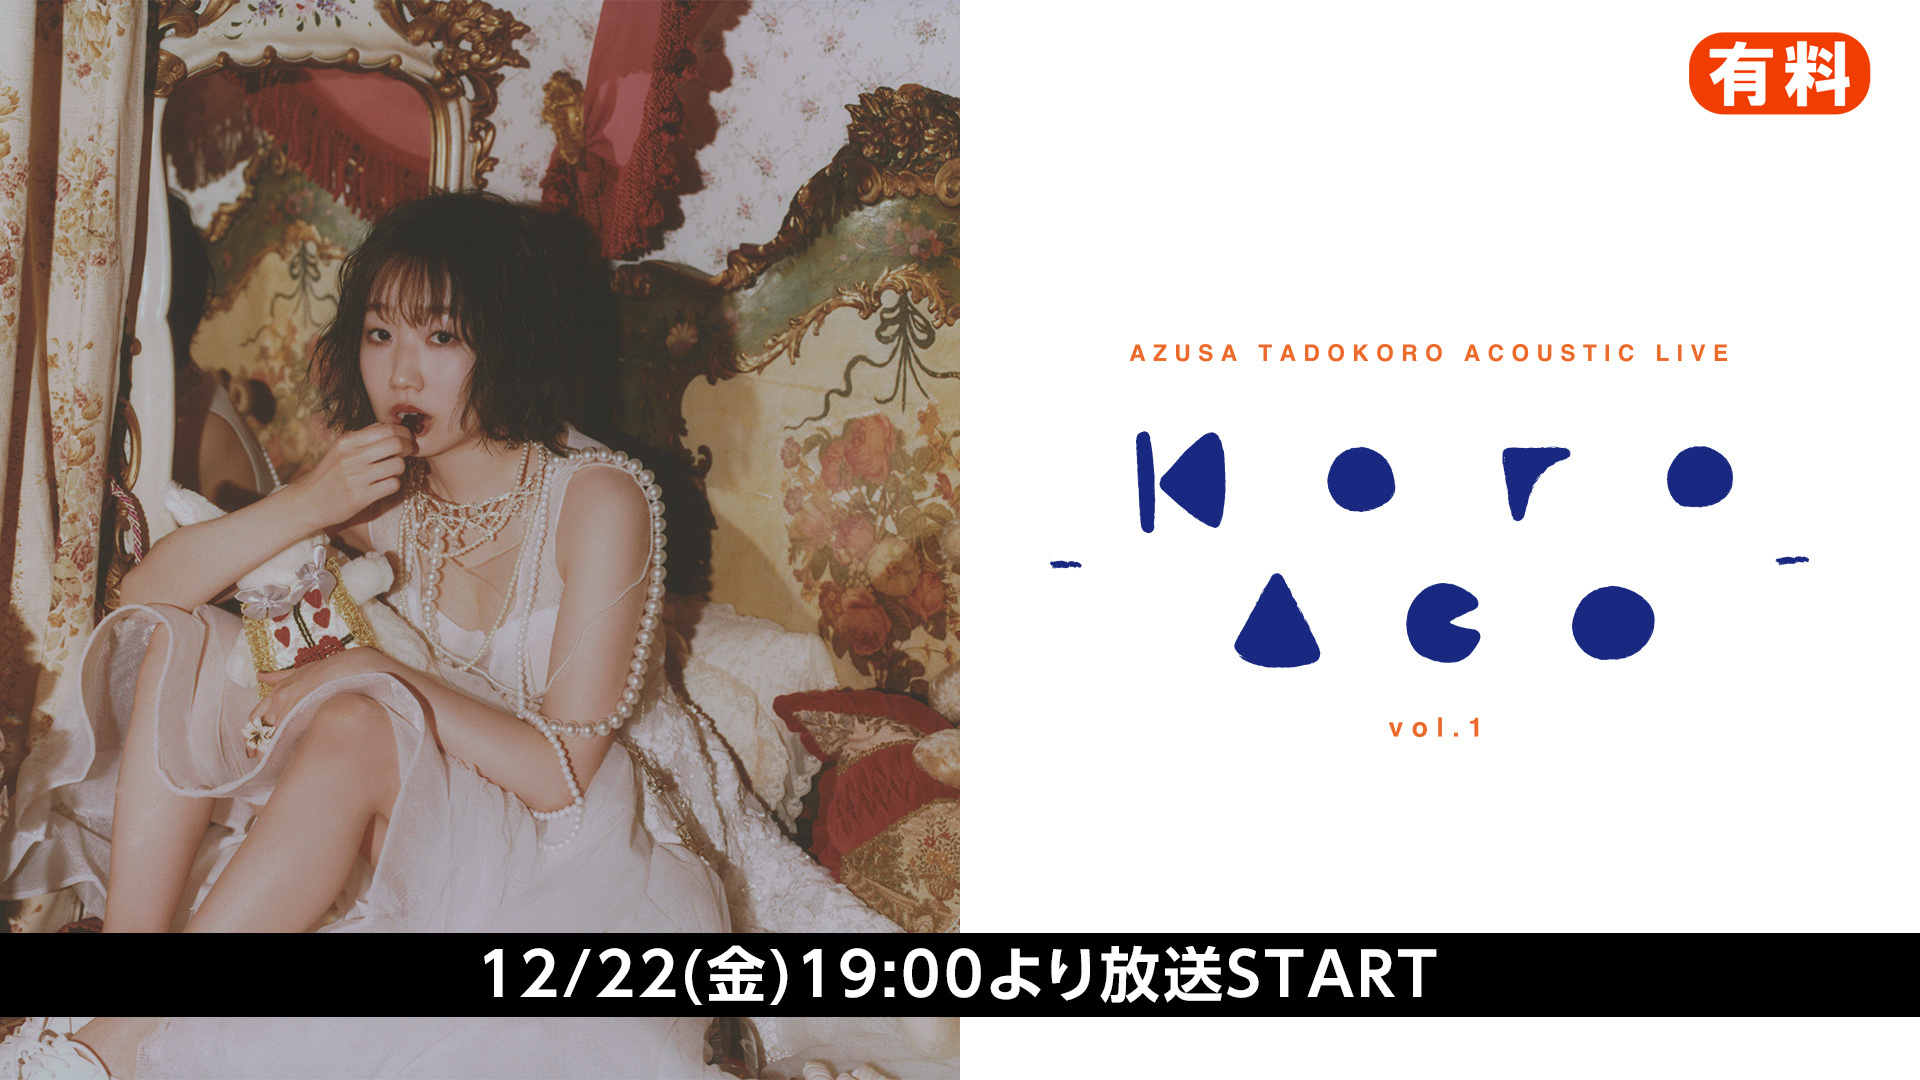 AZUSA TADOKORO ACOUSTIC LIVE -KoroAco- vol.1